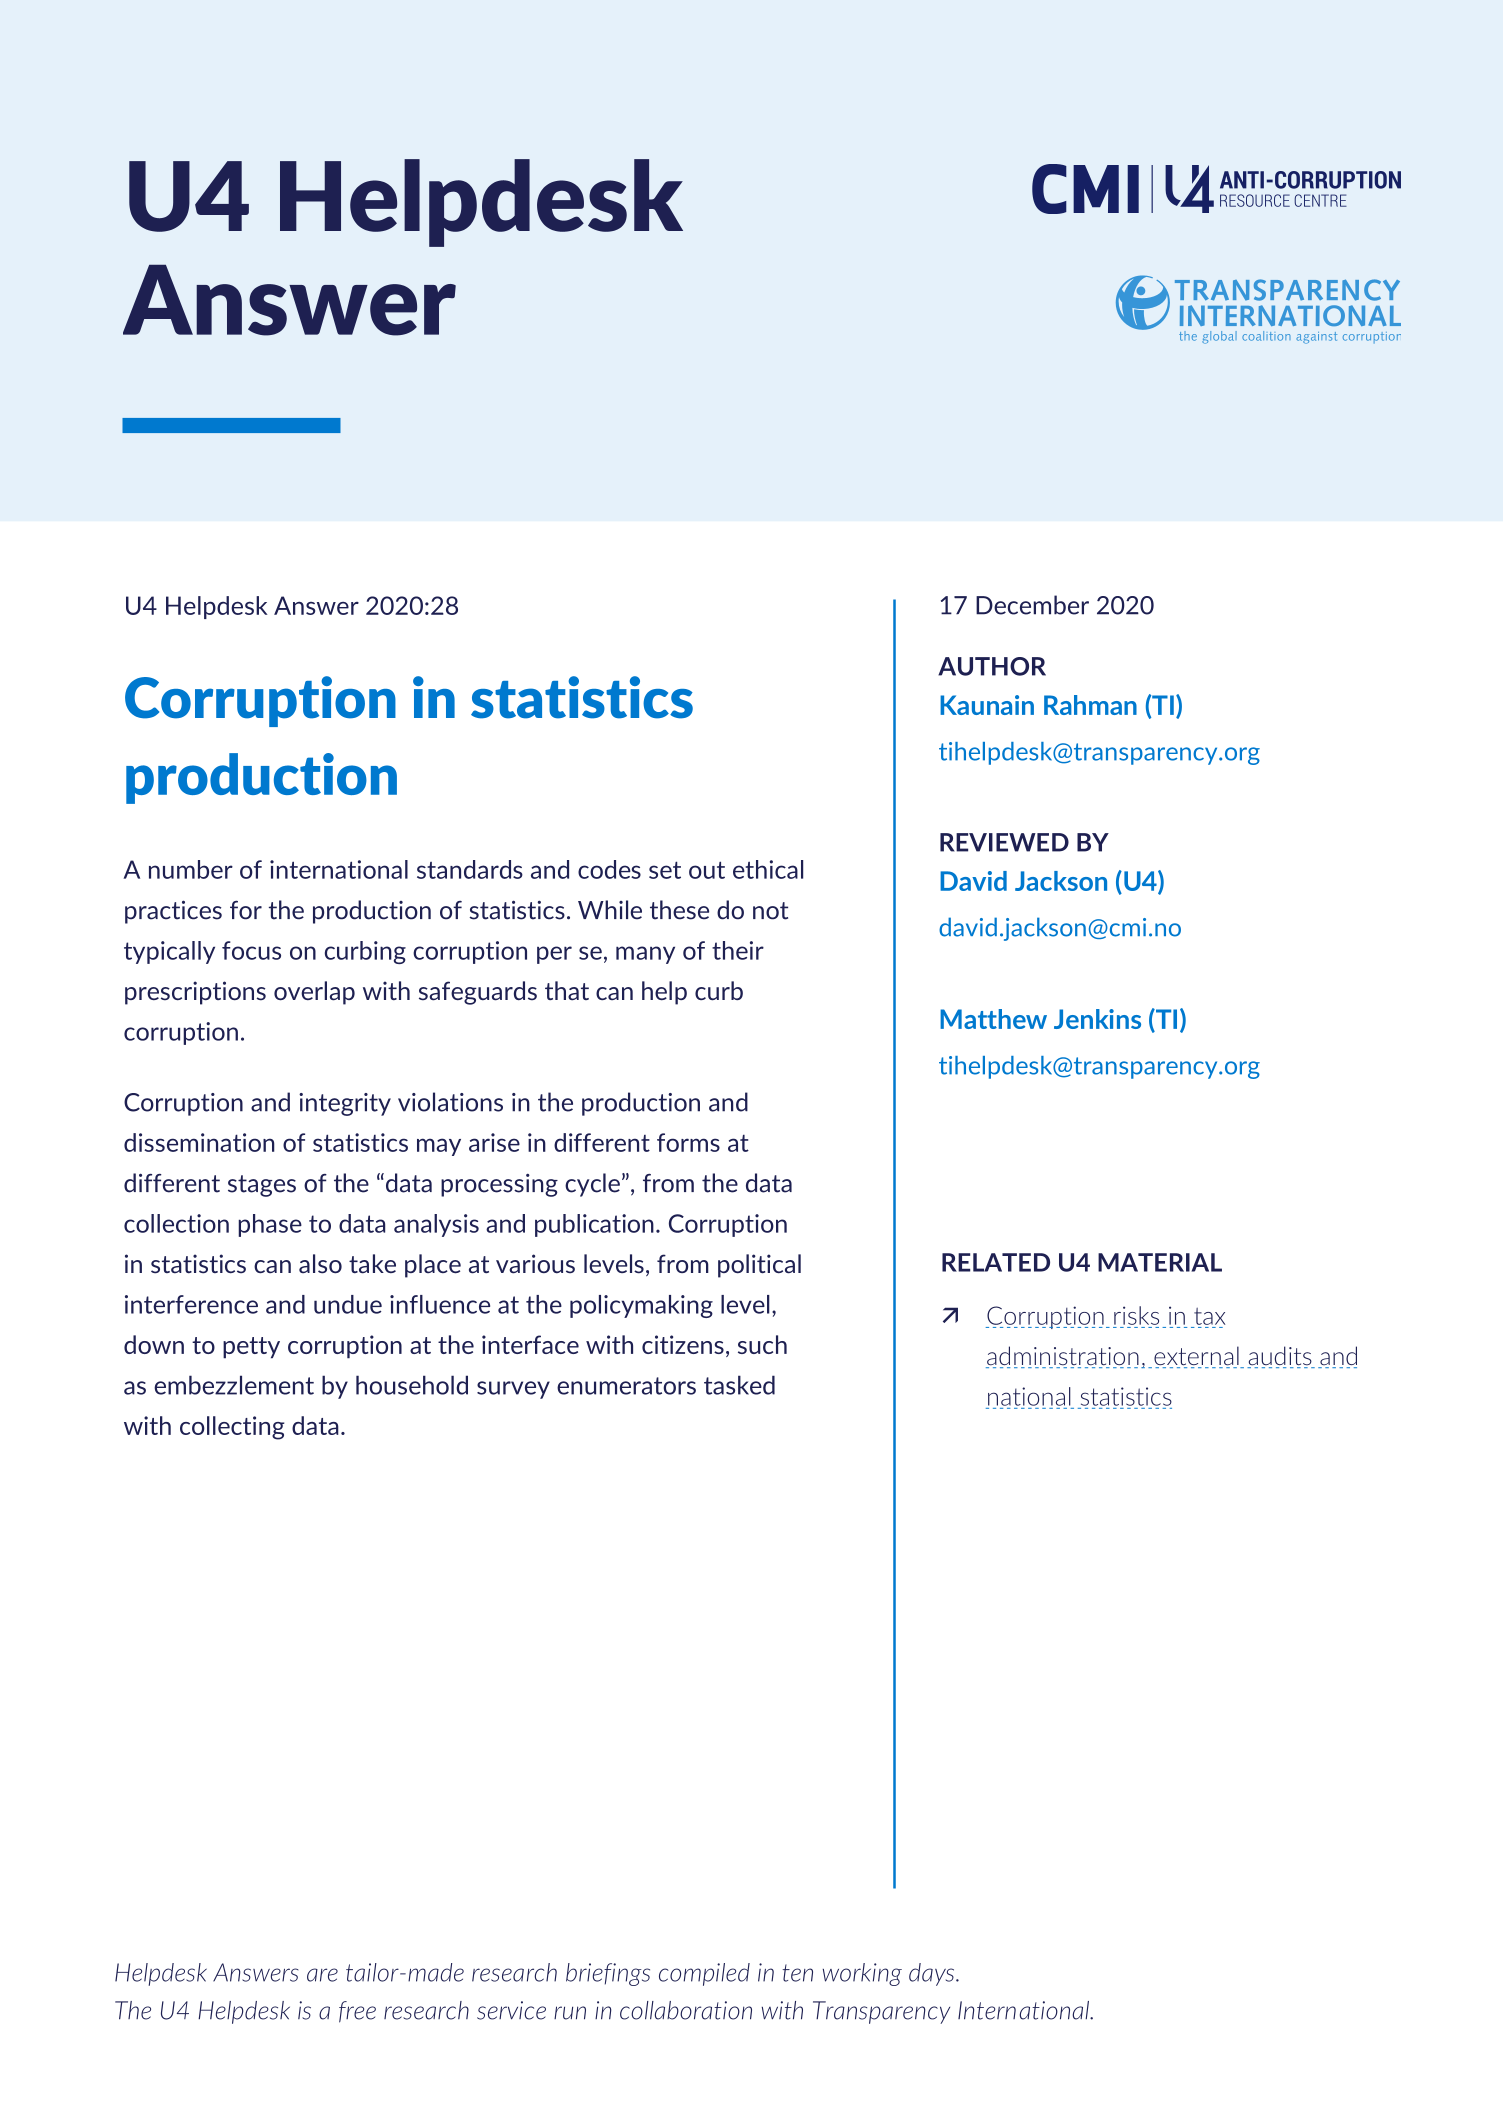 Corruption in statistics production